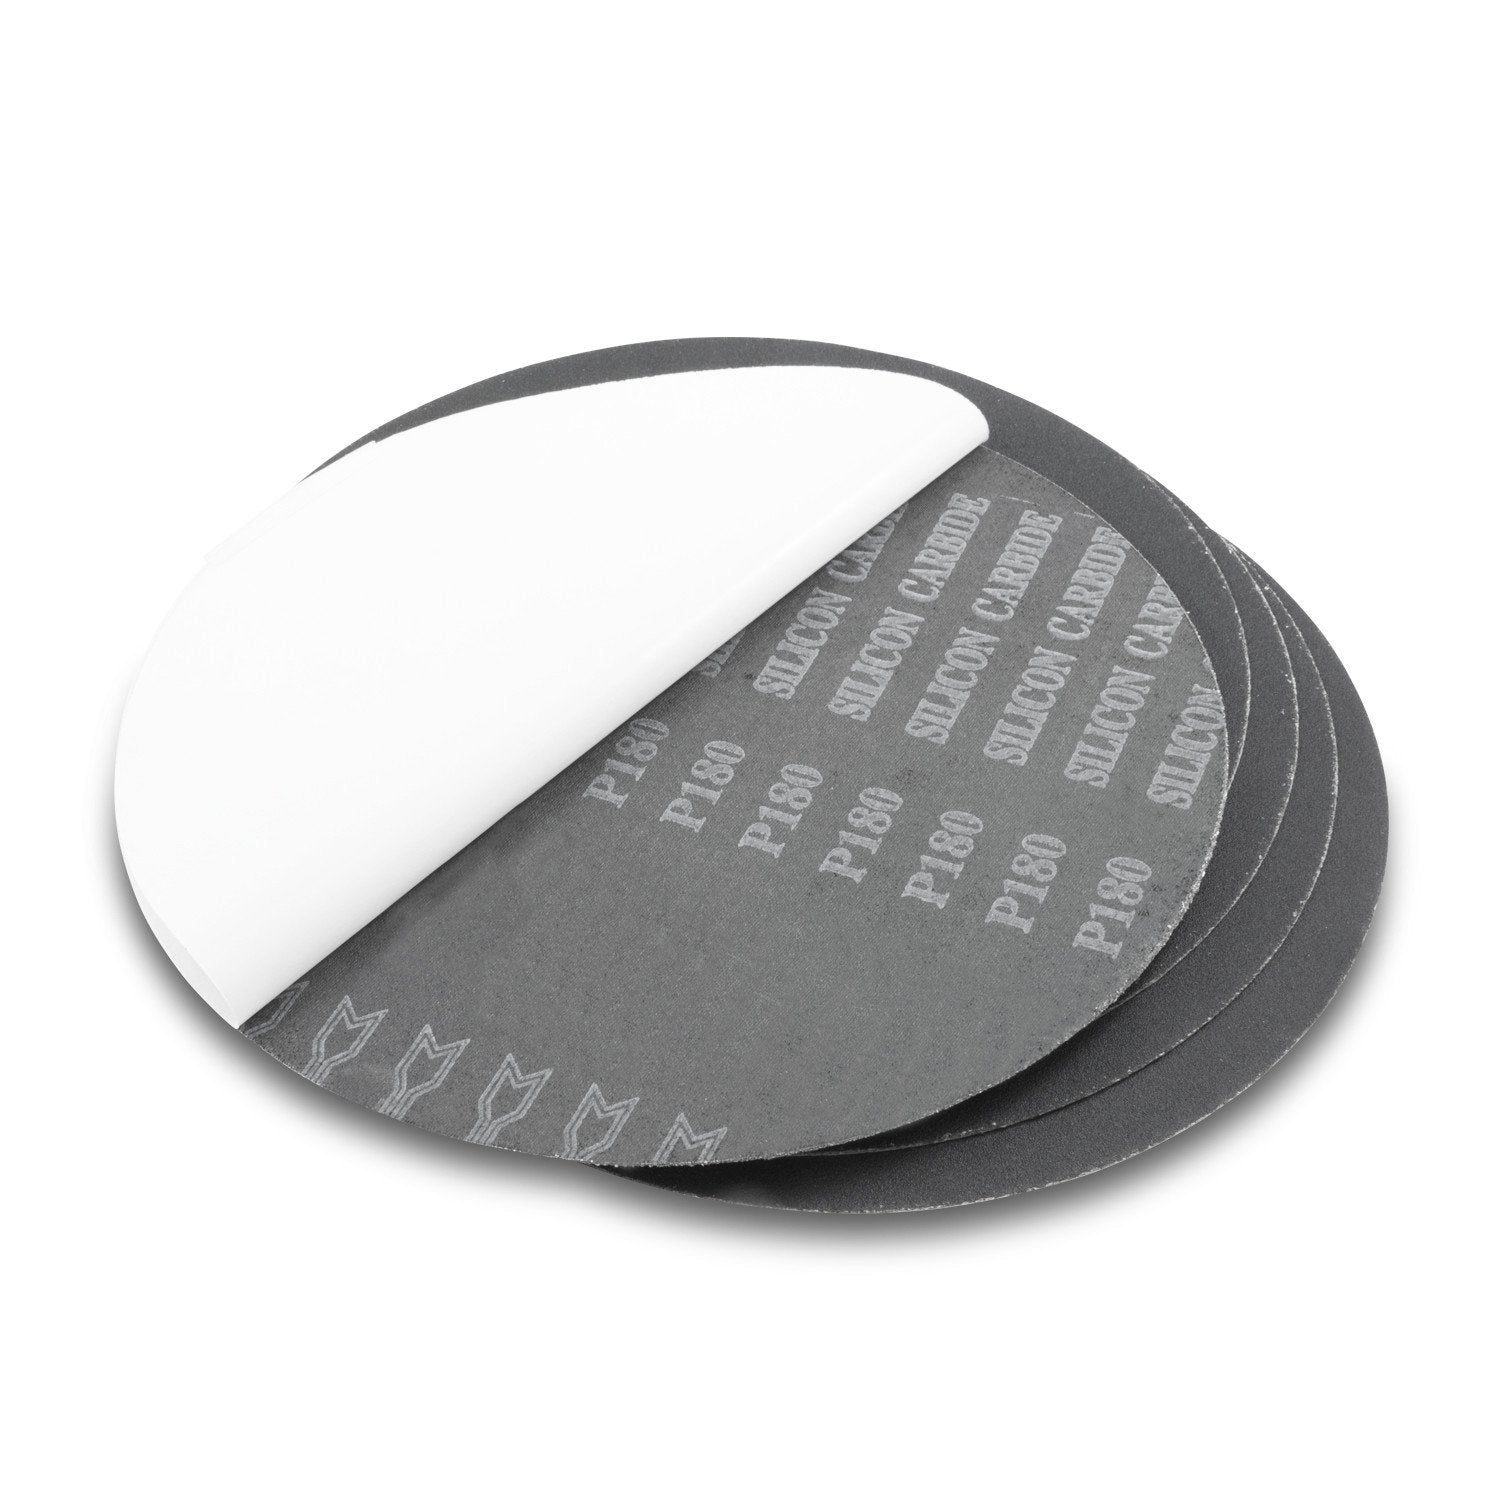 ACE Stick-On Sanding Discs 80 Grit Medium, 5 Discs, # 2002228 *New*